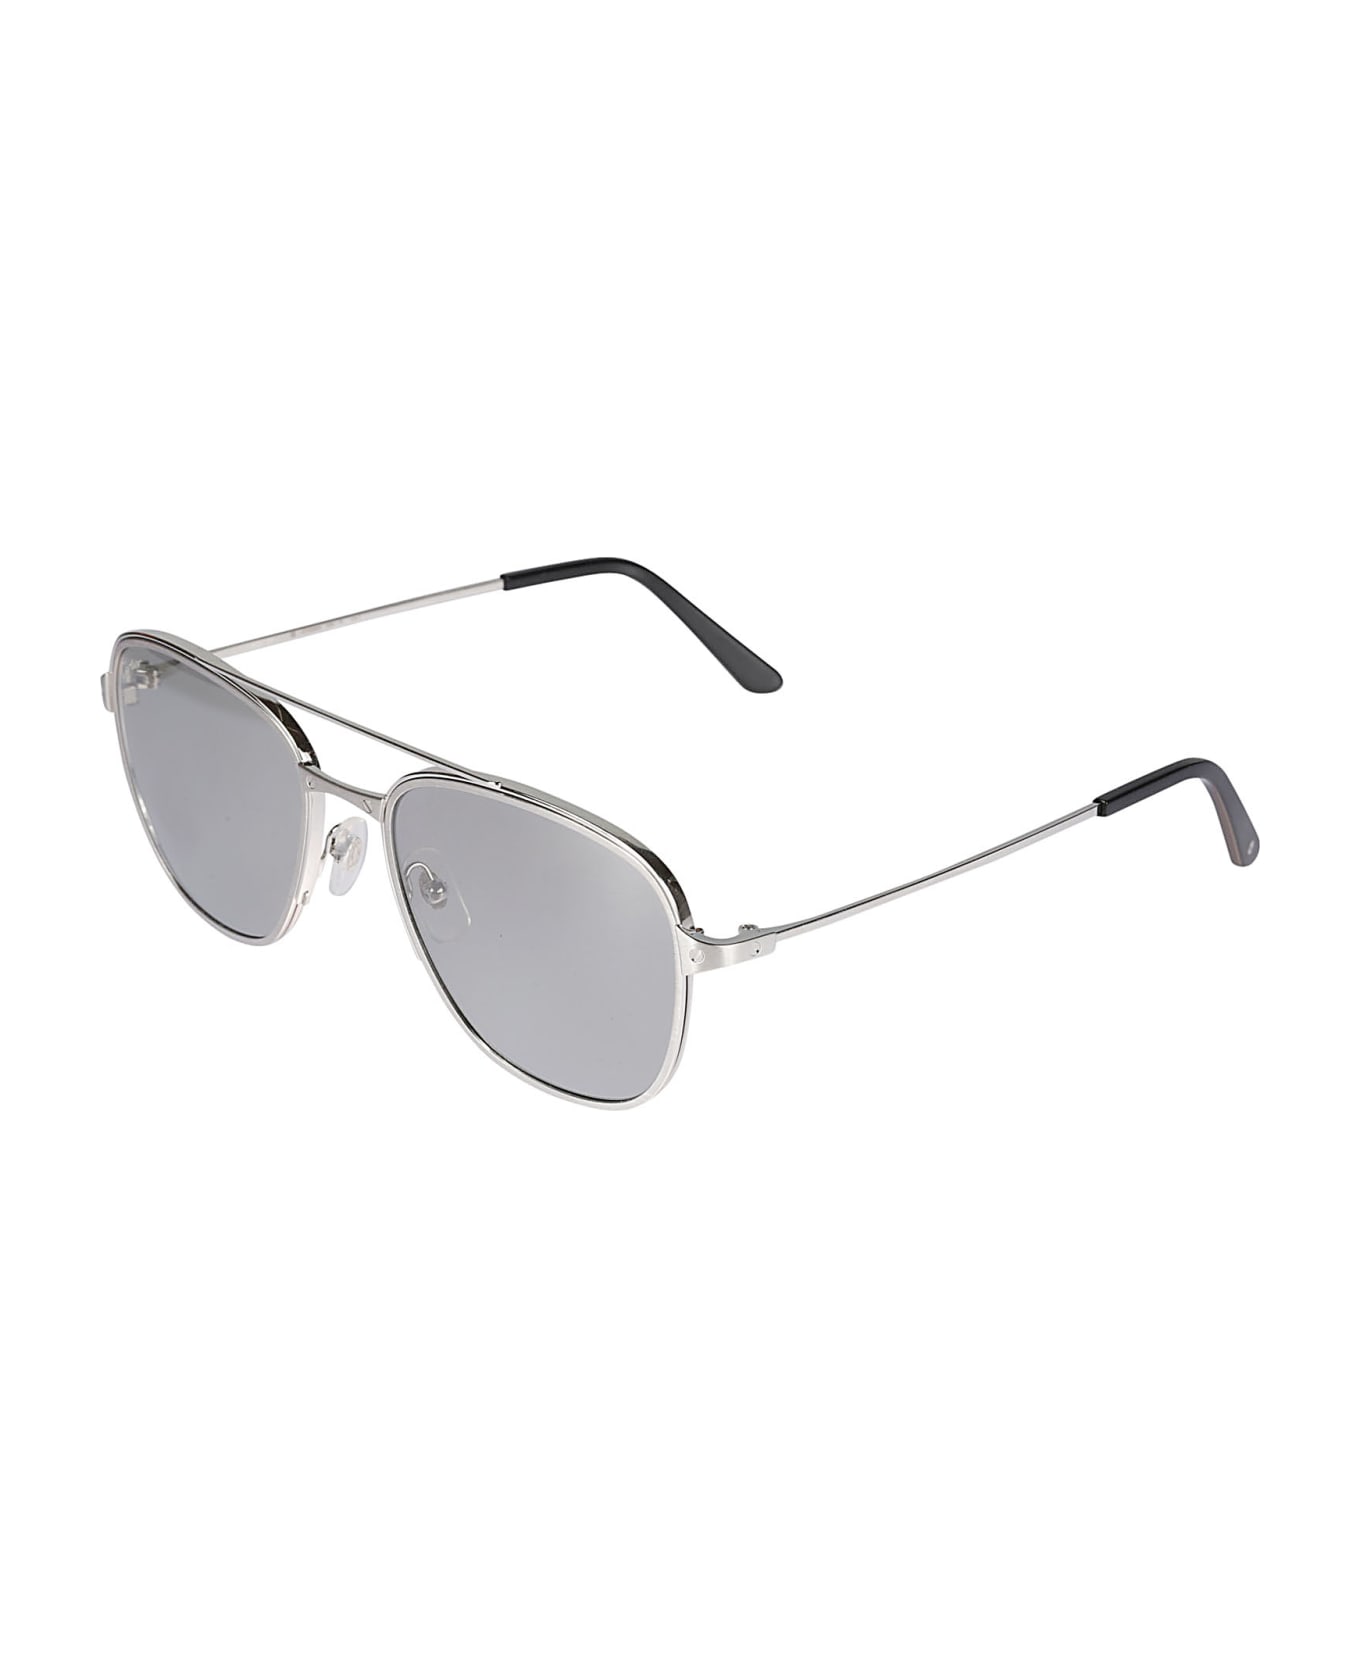 Cartier Eyewear Genuine Sunglasses tommy - 006 silver silver silver